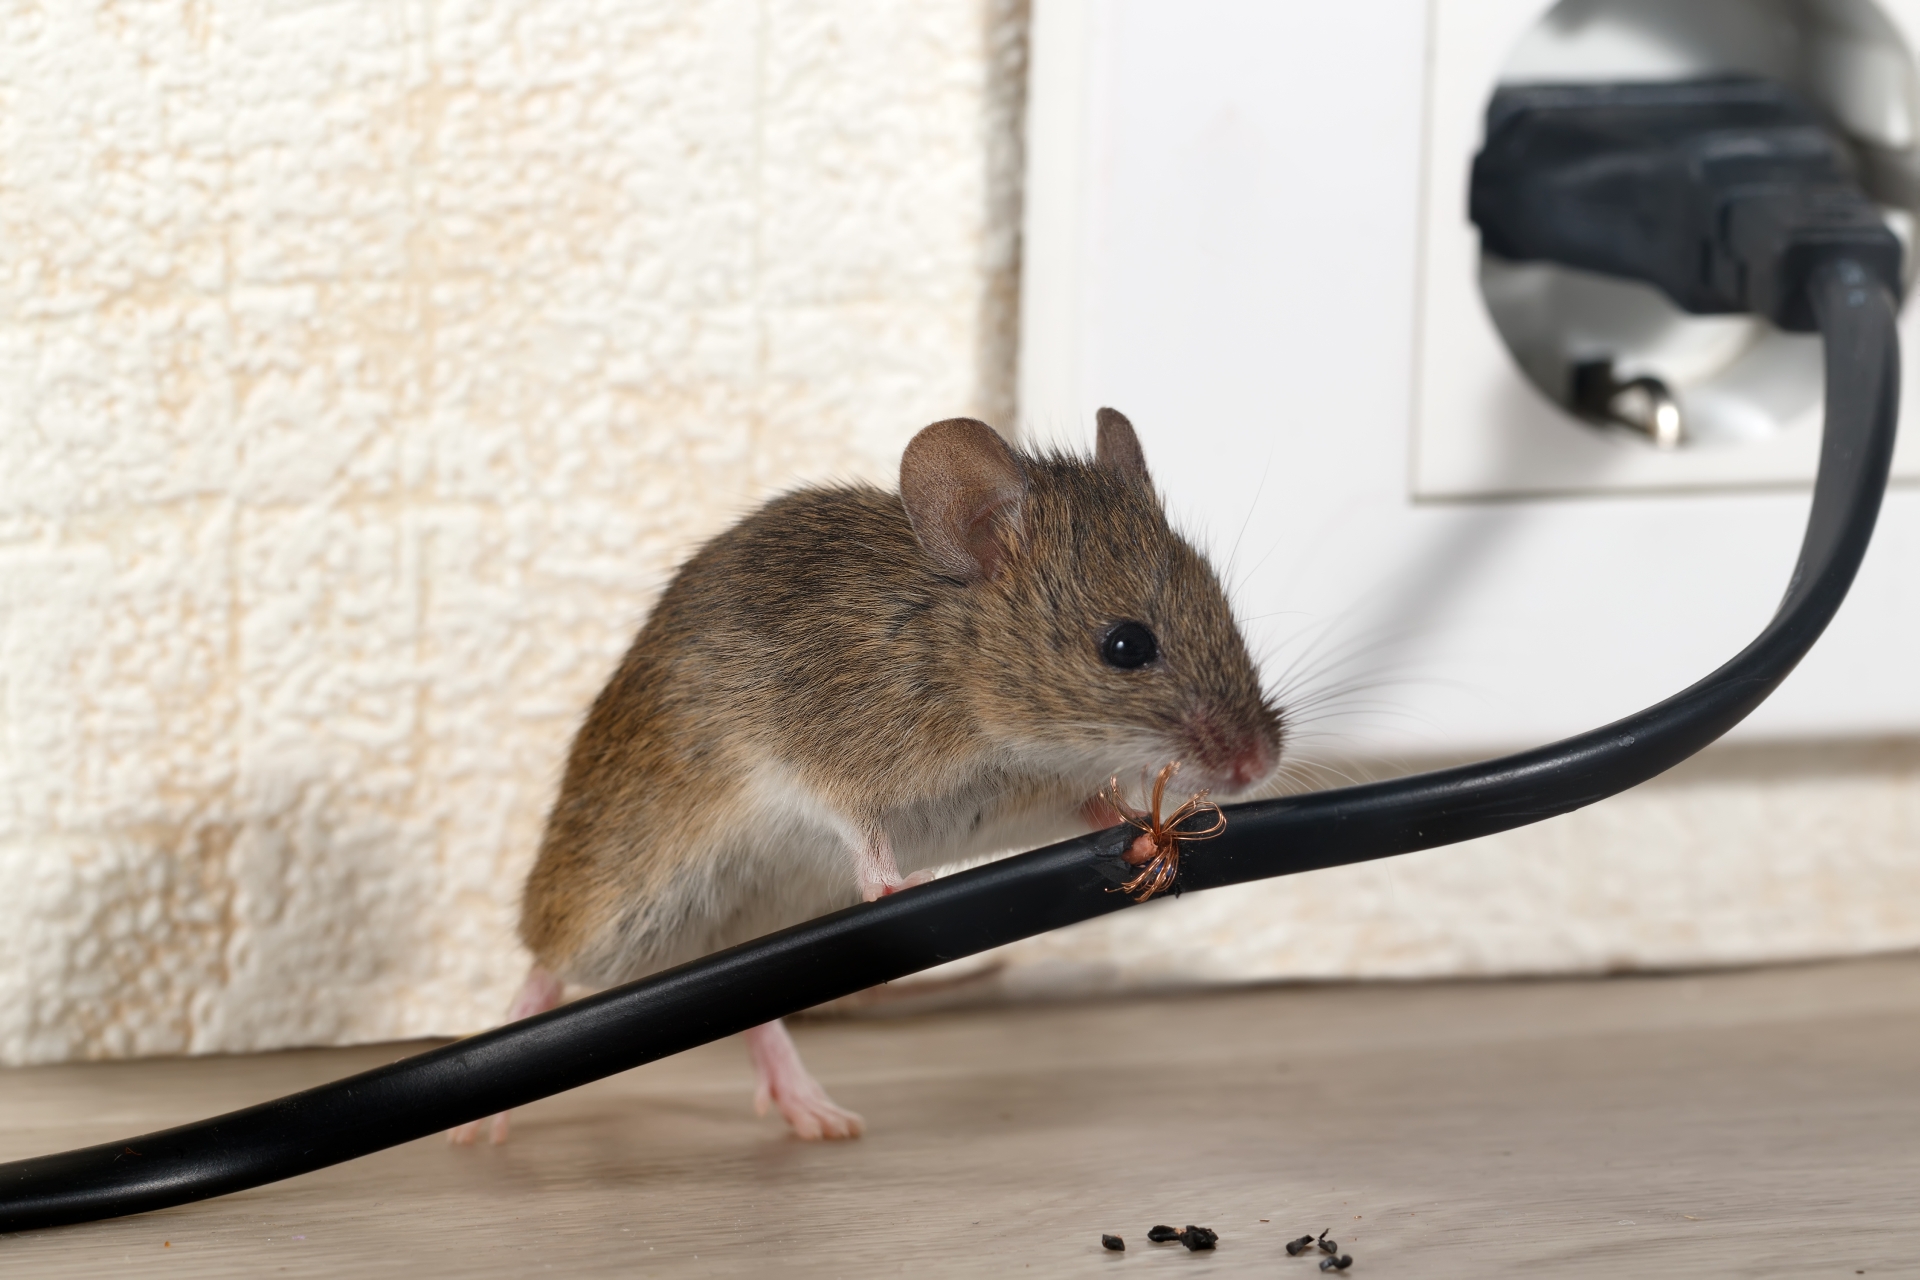 Mice Infestation, Pest Control in Eltham, Mottingham, SE9. Call Now 020 8166 9746